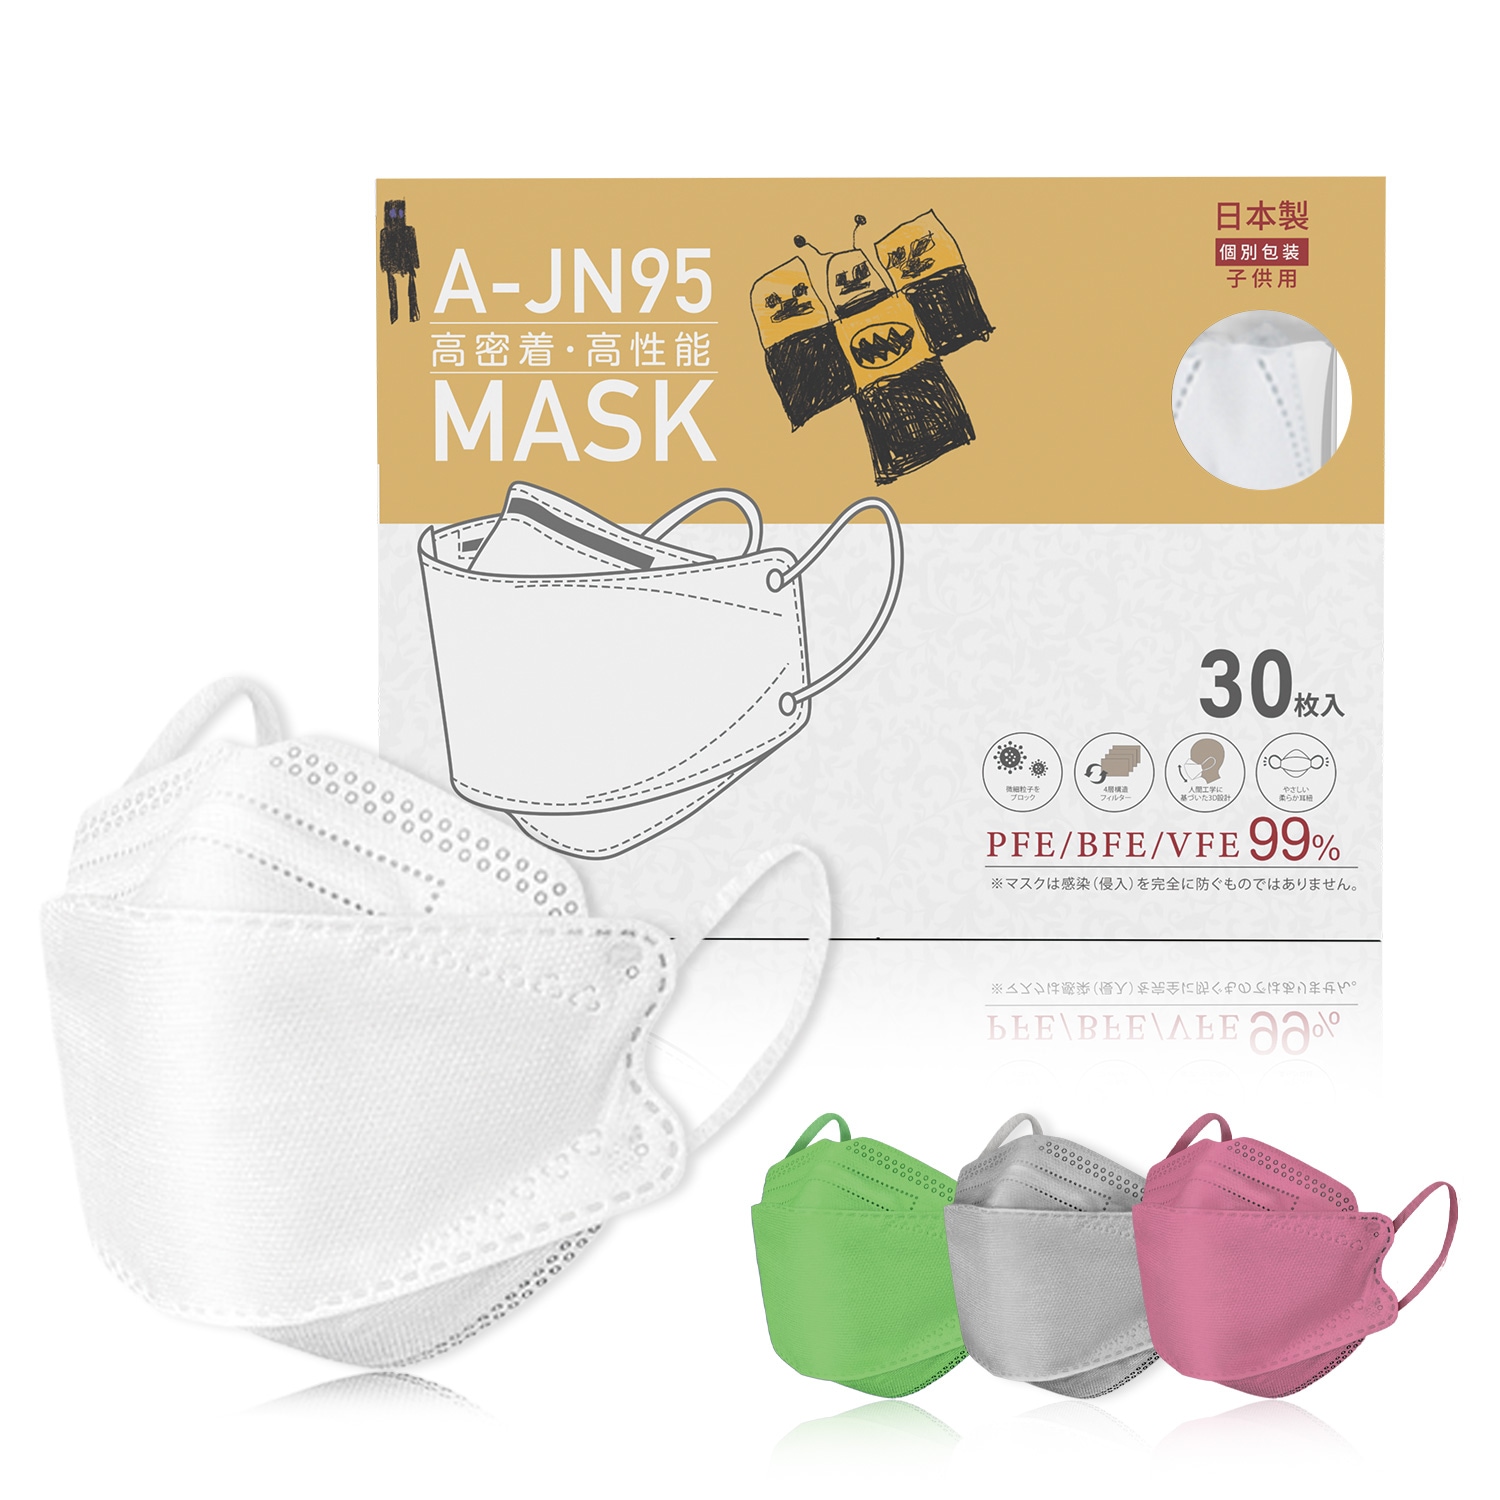 jn95 マスク 名作 3d立体マスク 日本製 30枚 カラーマスク 好評 個包装 子供用 四層構造